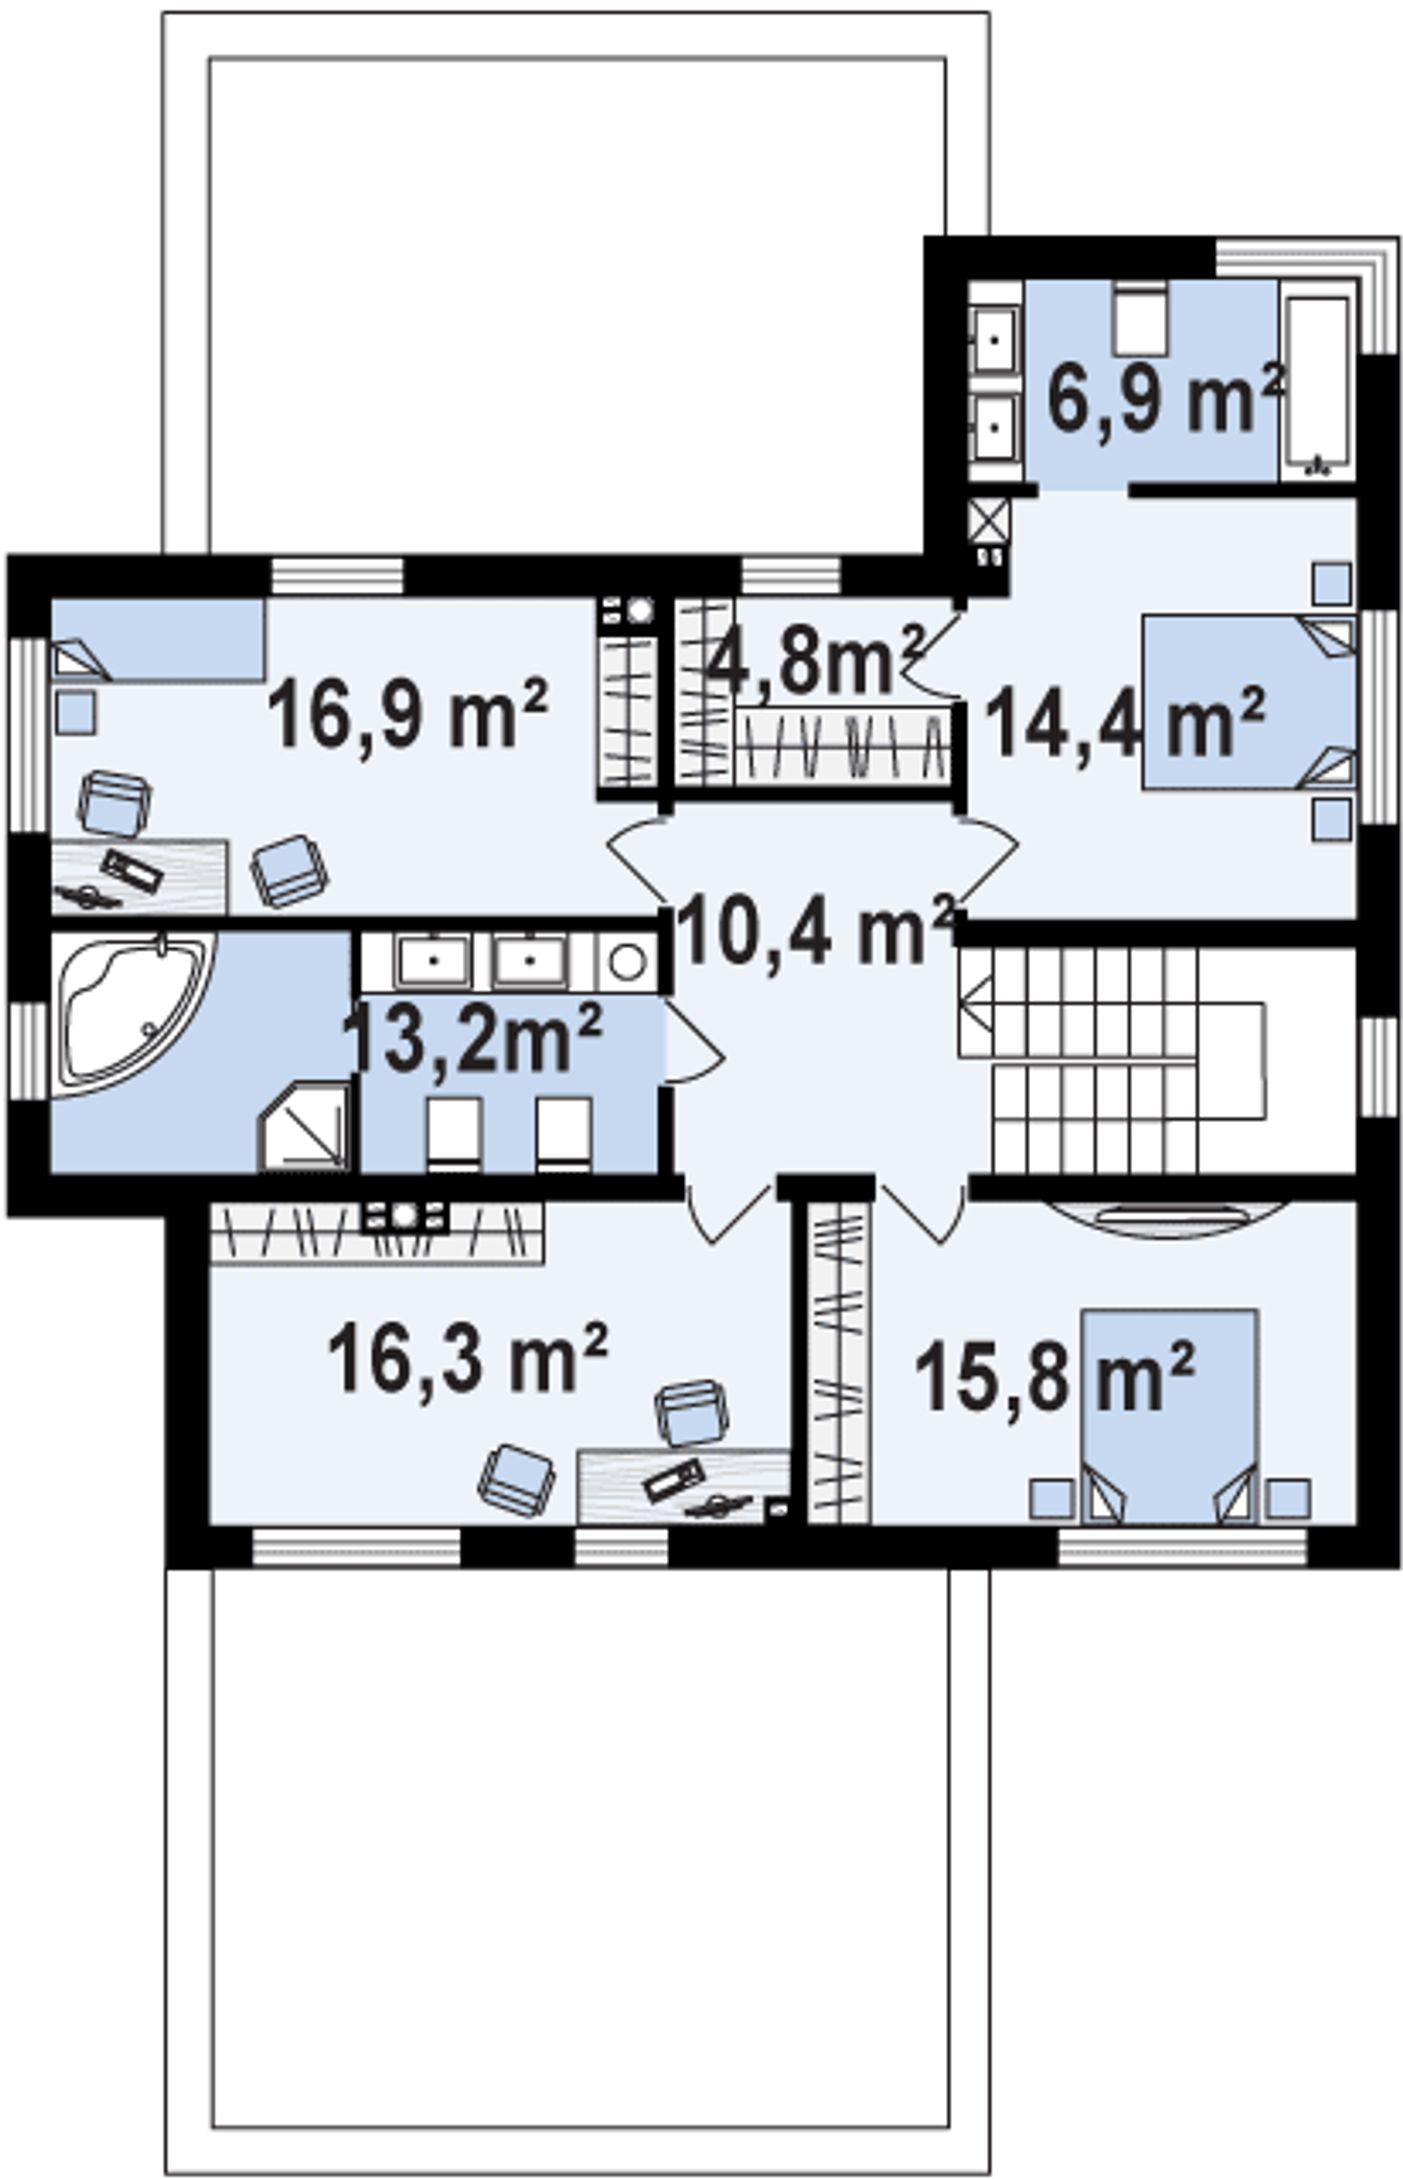 2-ой этаж - план проекта Zx112